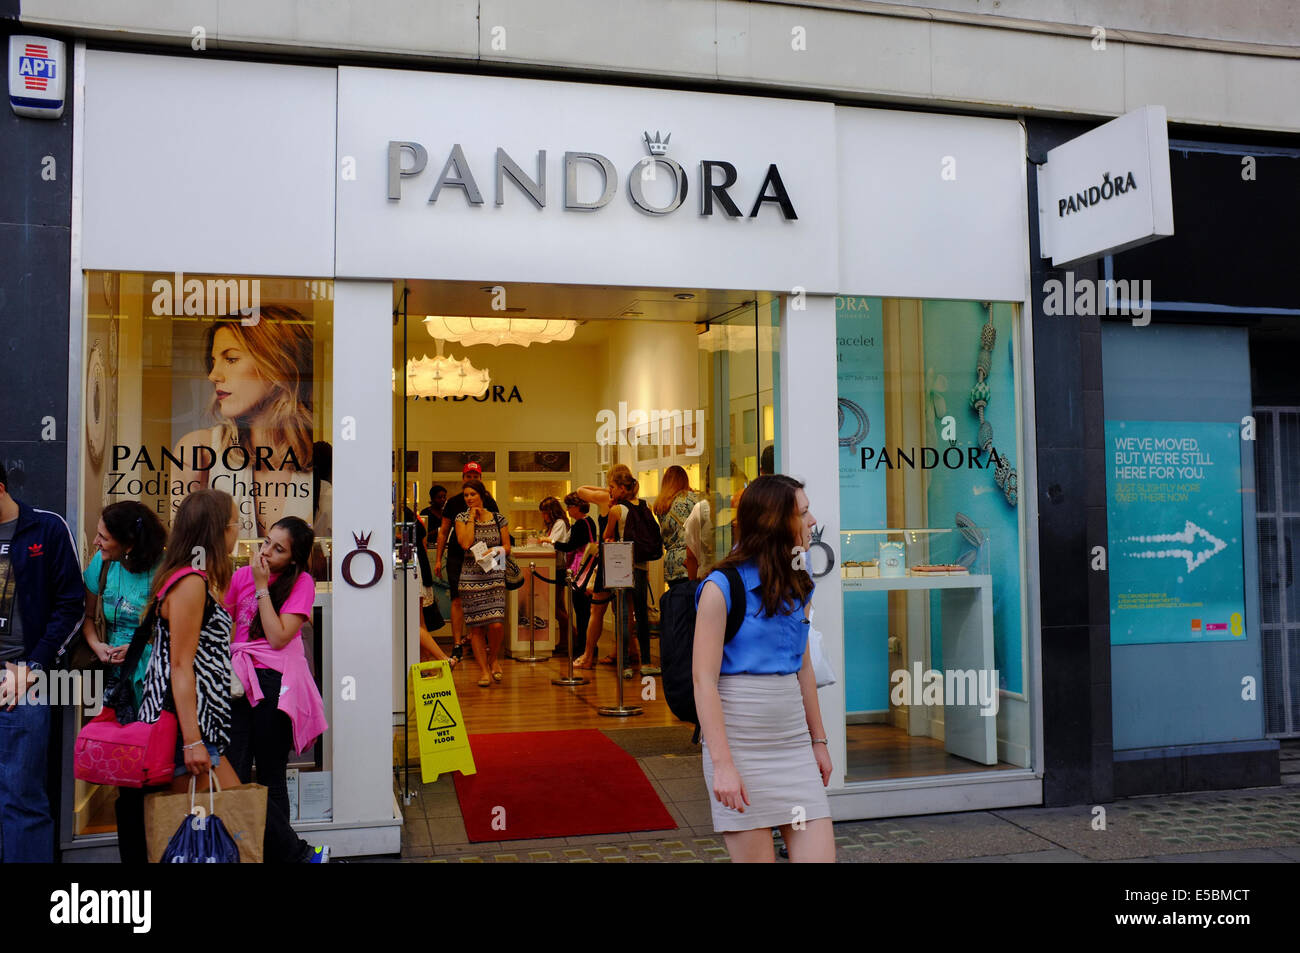 PANDORA on Oxford Street, London Stock Photo - Alamy